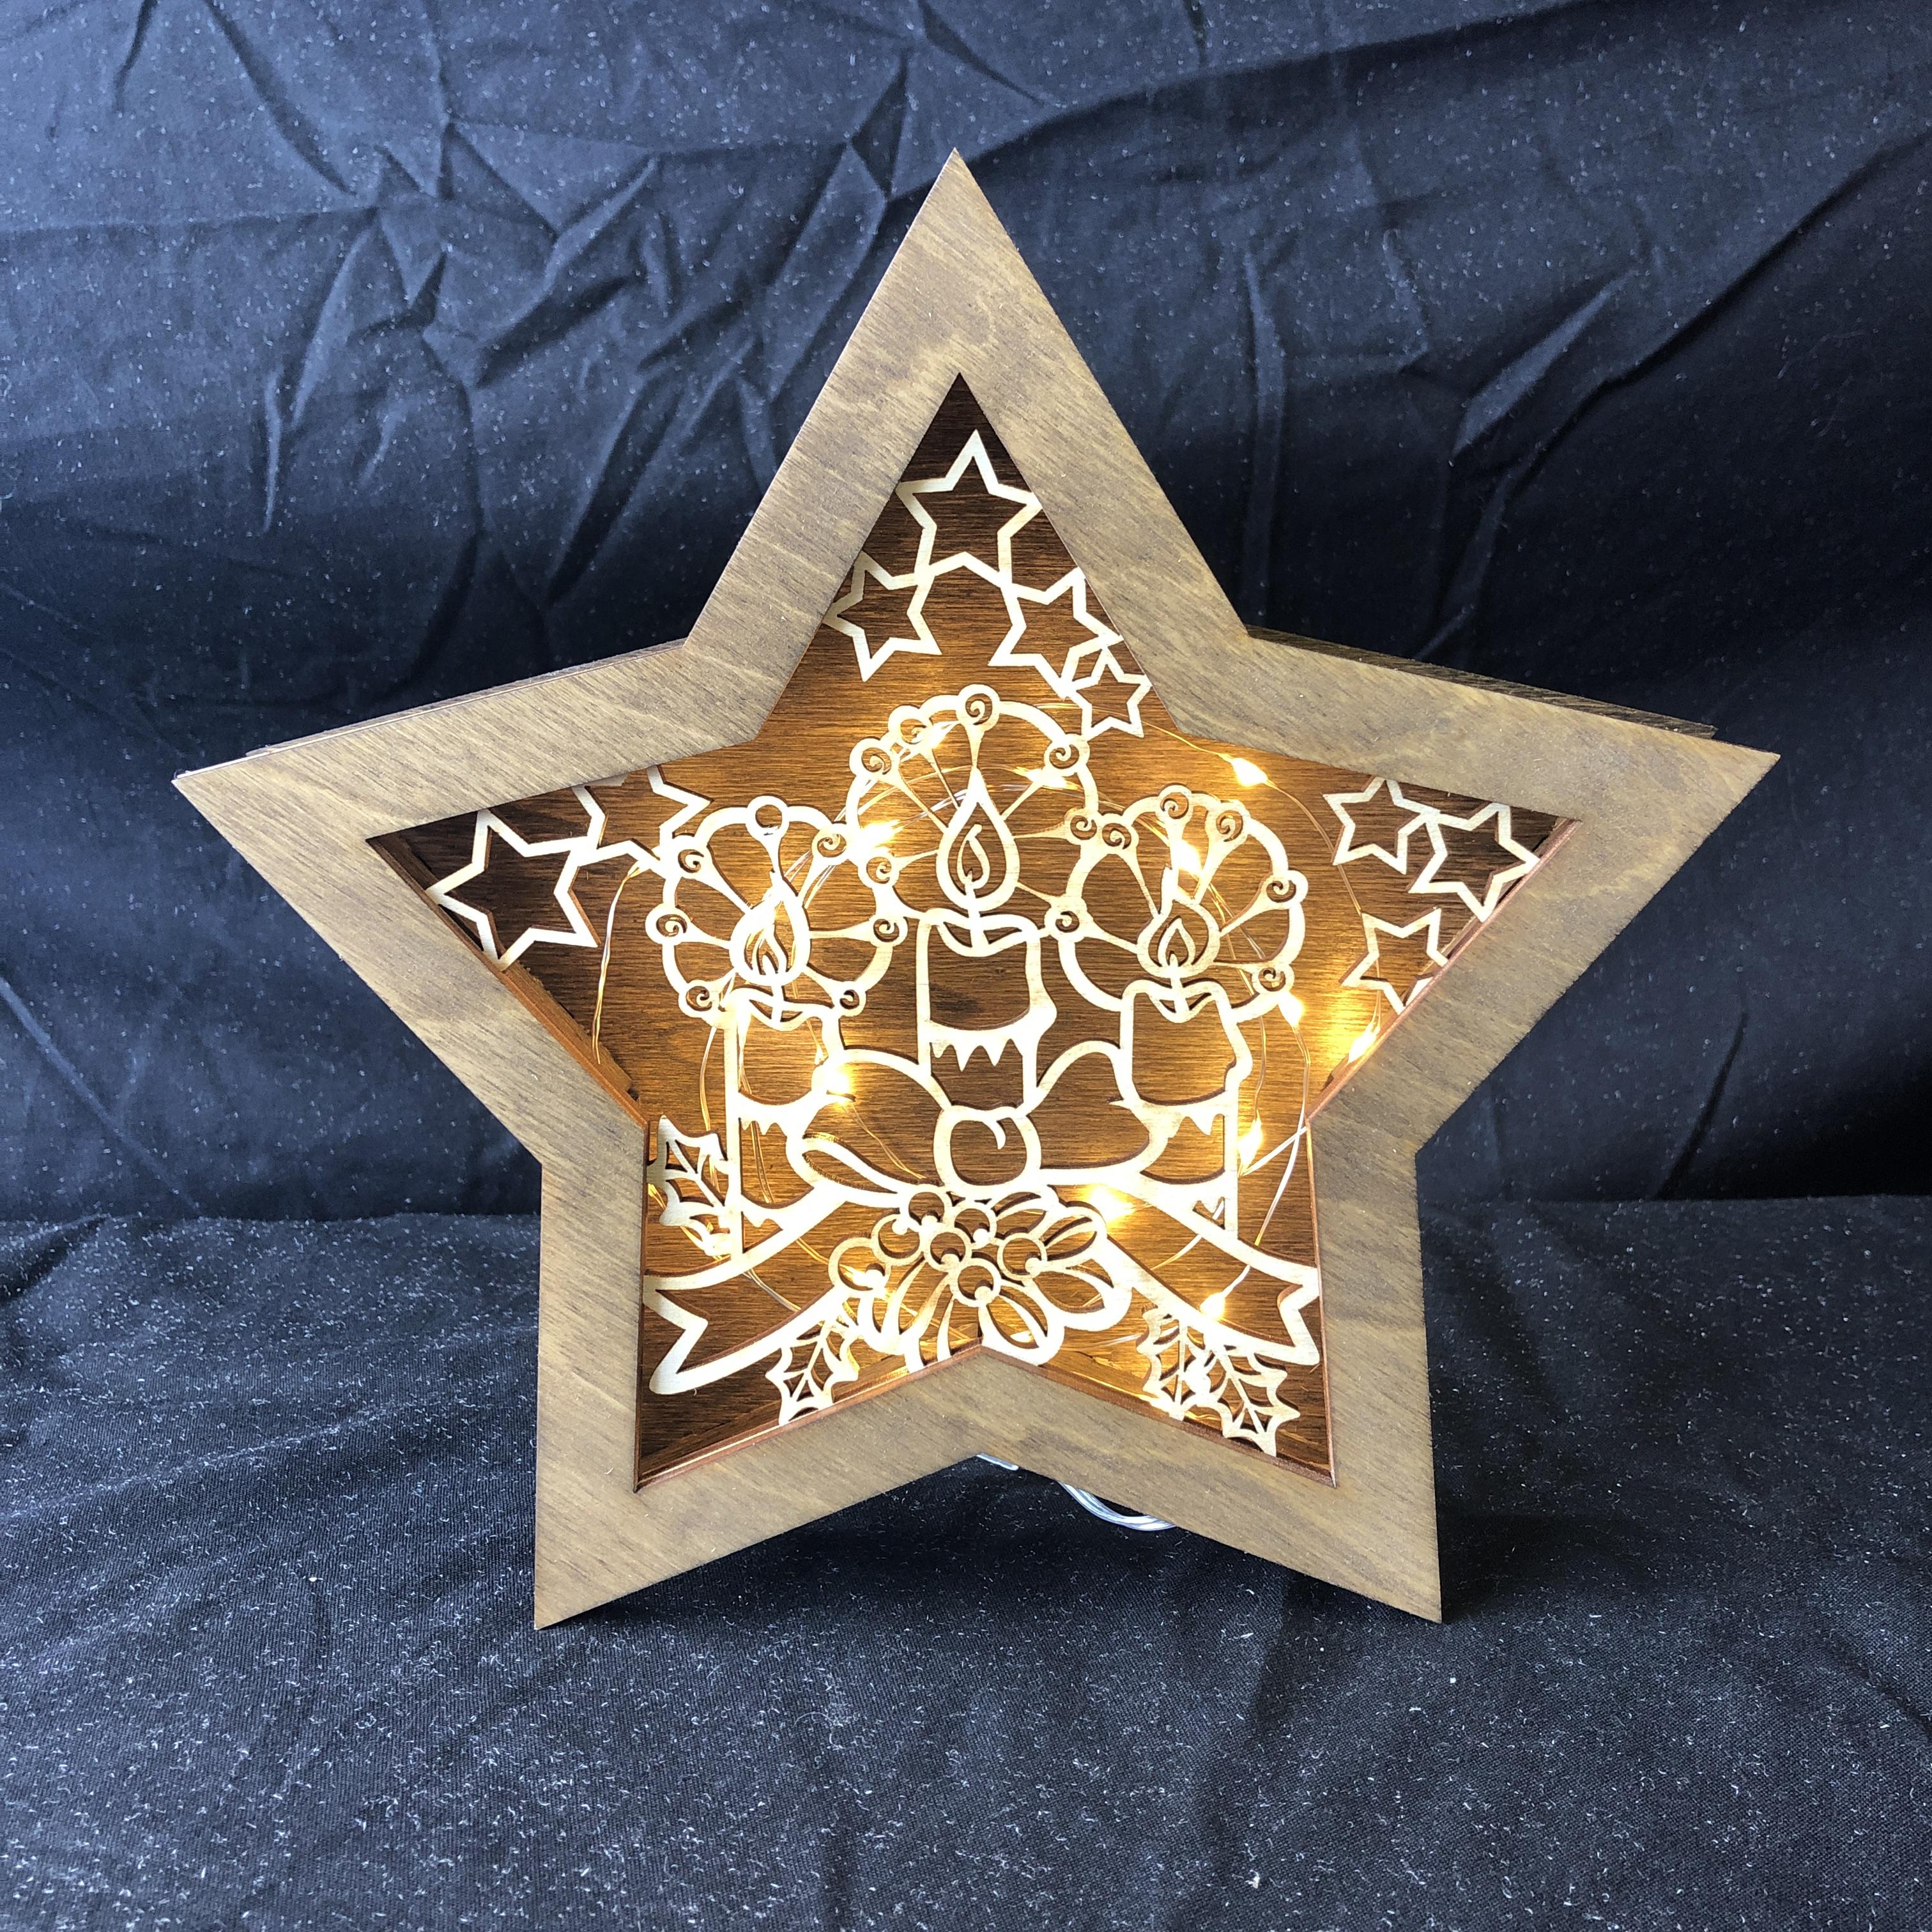 Red Berry Crafts Ltd:Light up Star Decoration